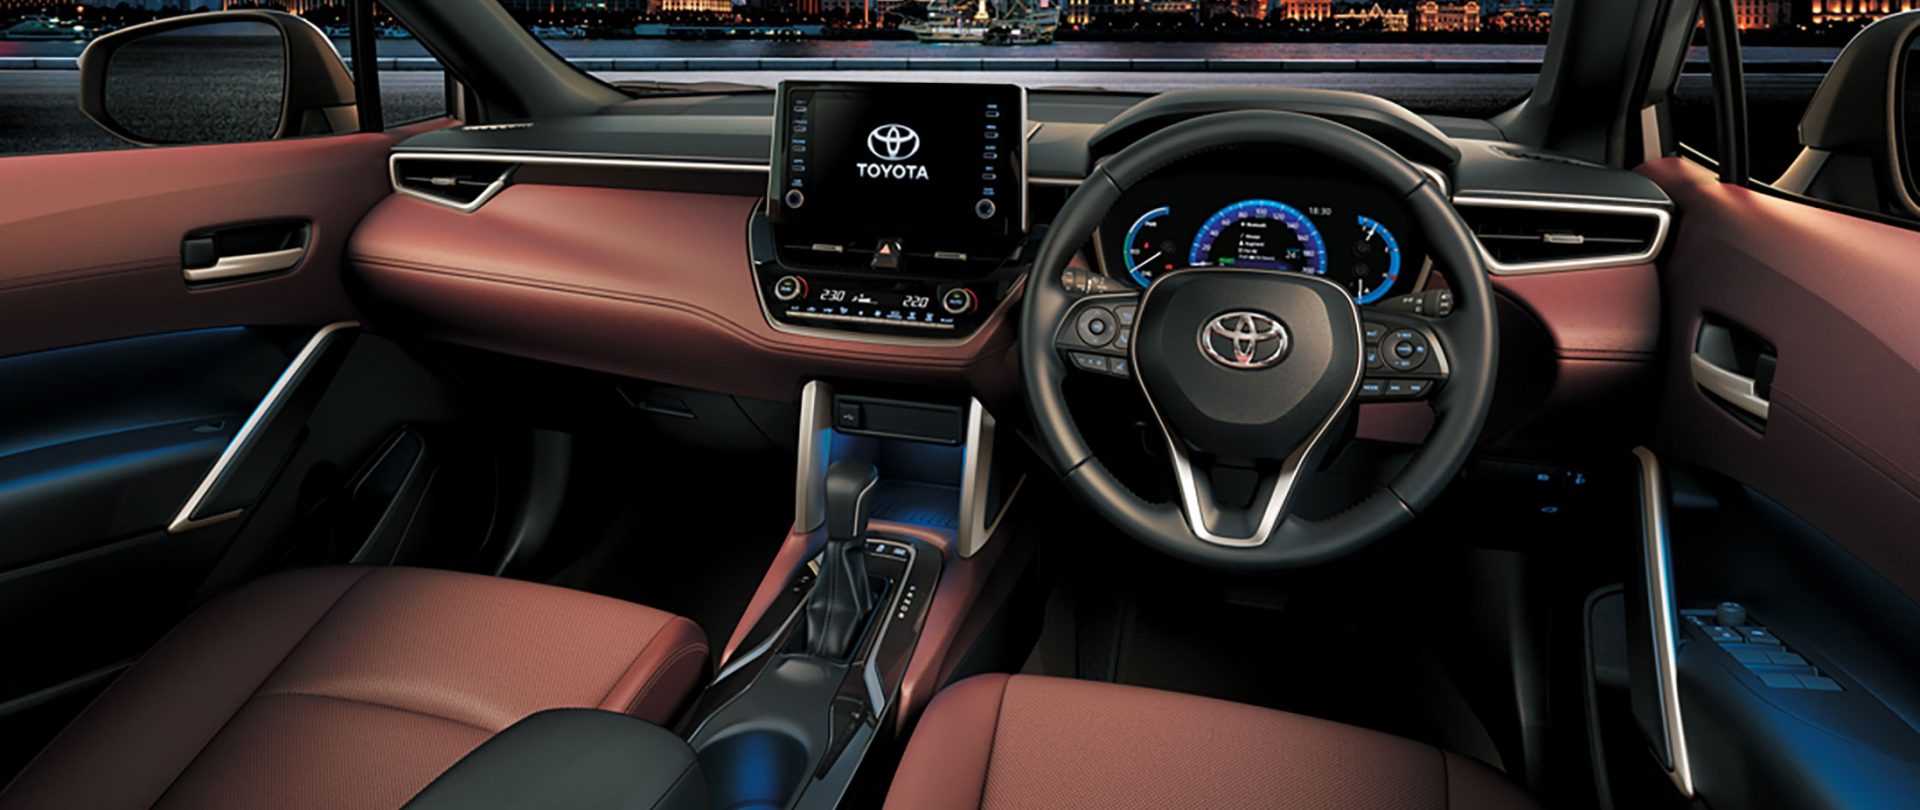 Toyota Cross Interior: